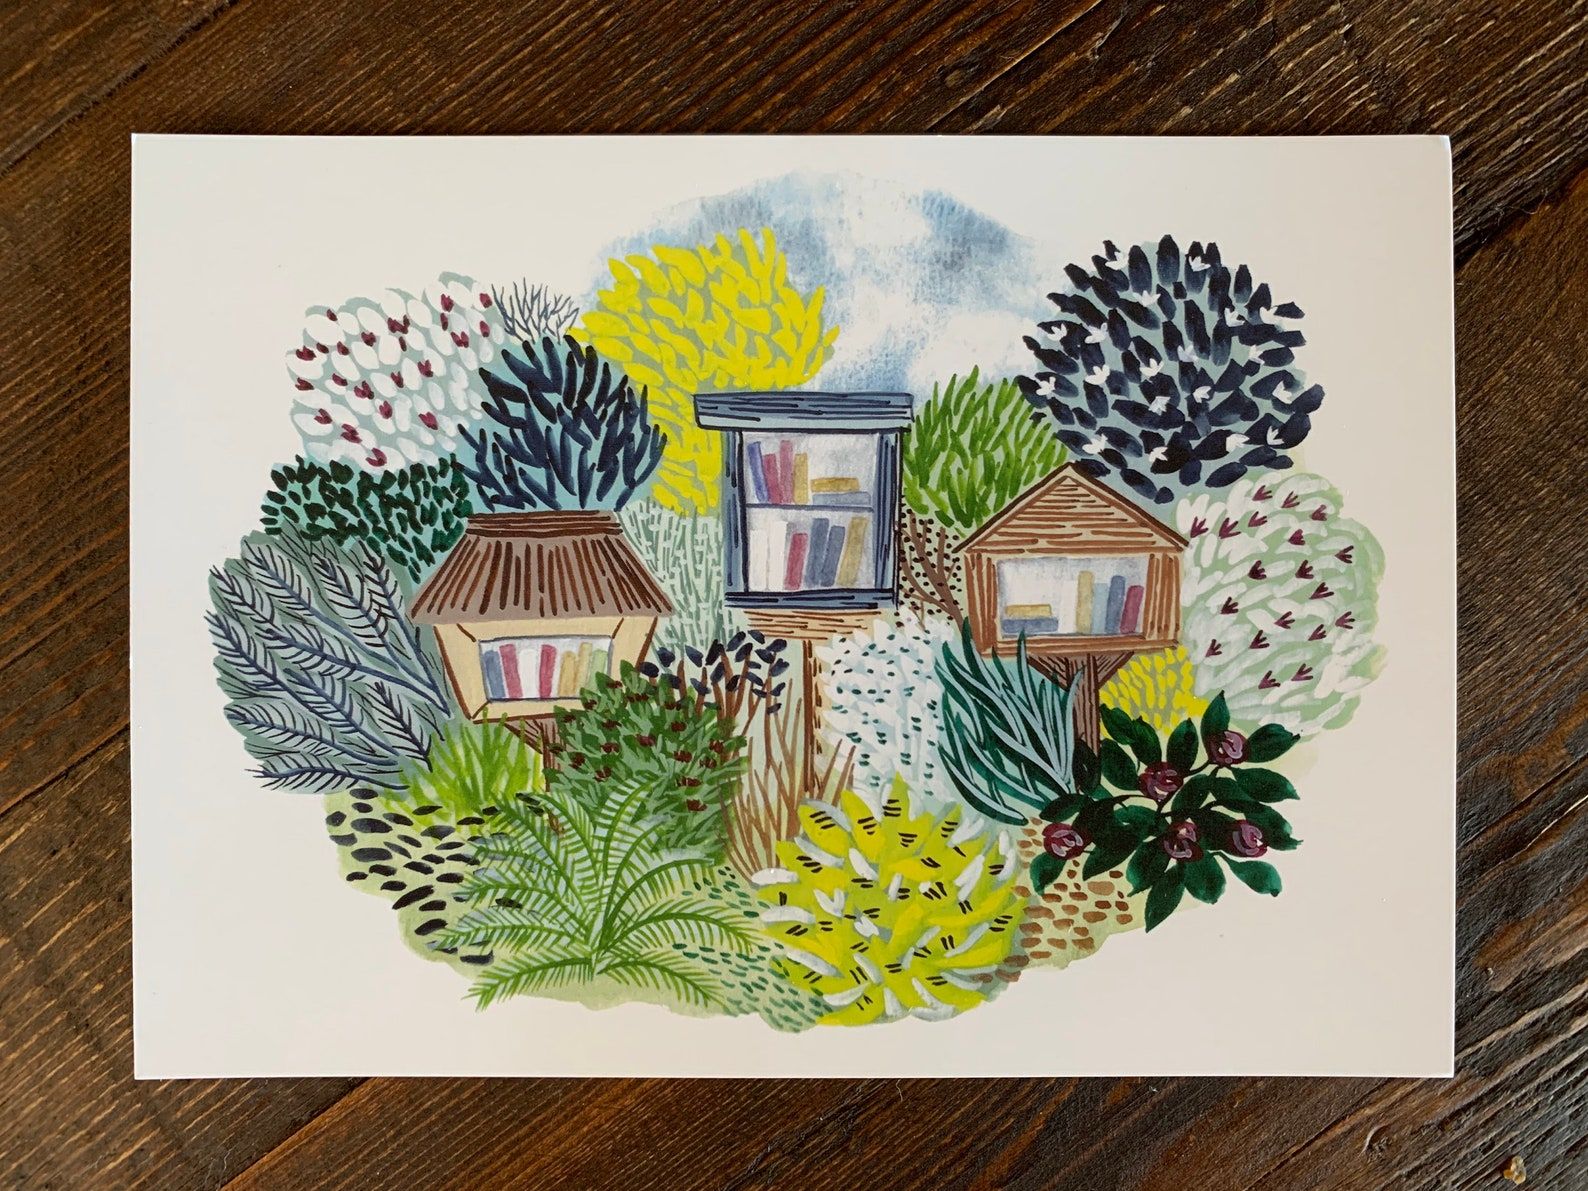 A postcard depicting three LFL's among greenery